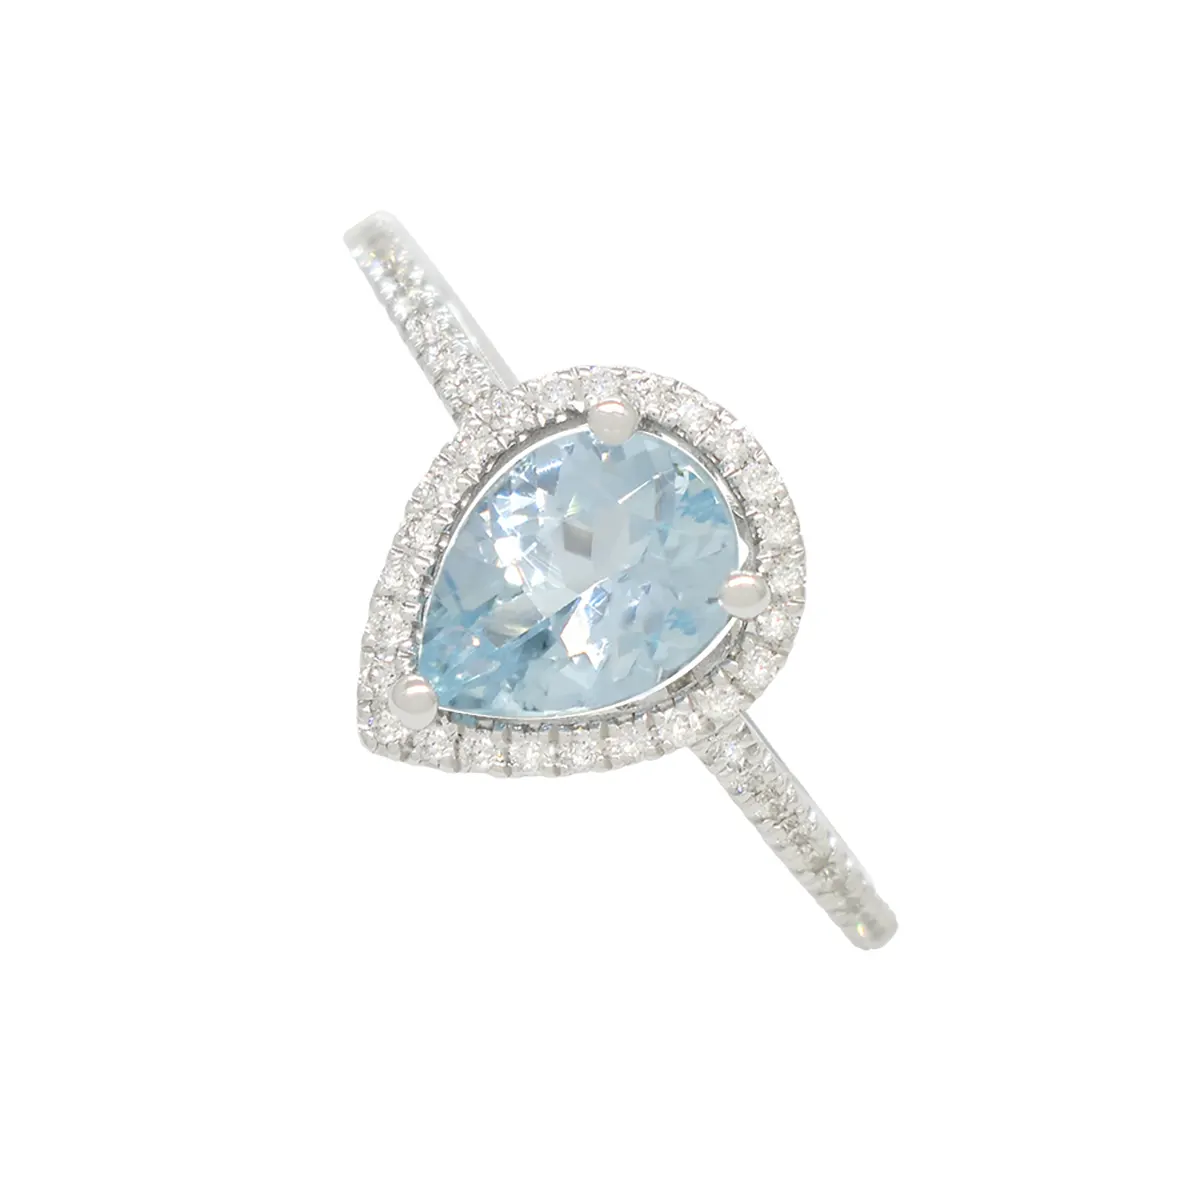 White gold aquamarine and diamond ring with 0.90 Ct. pear shape natural aquamarine and 0.18 Ct. t.w. in 45 round cut genuine diamonds